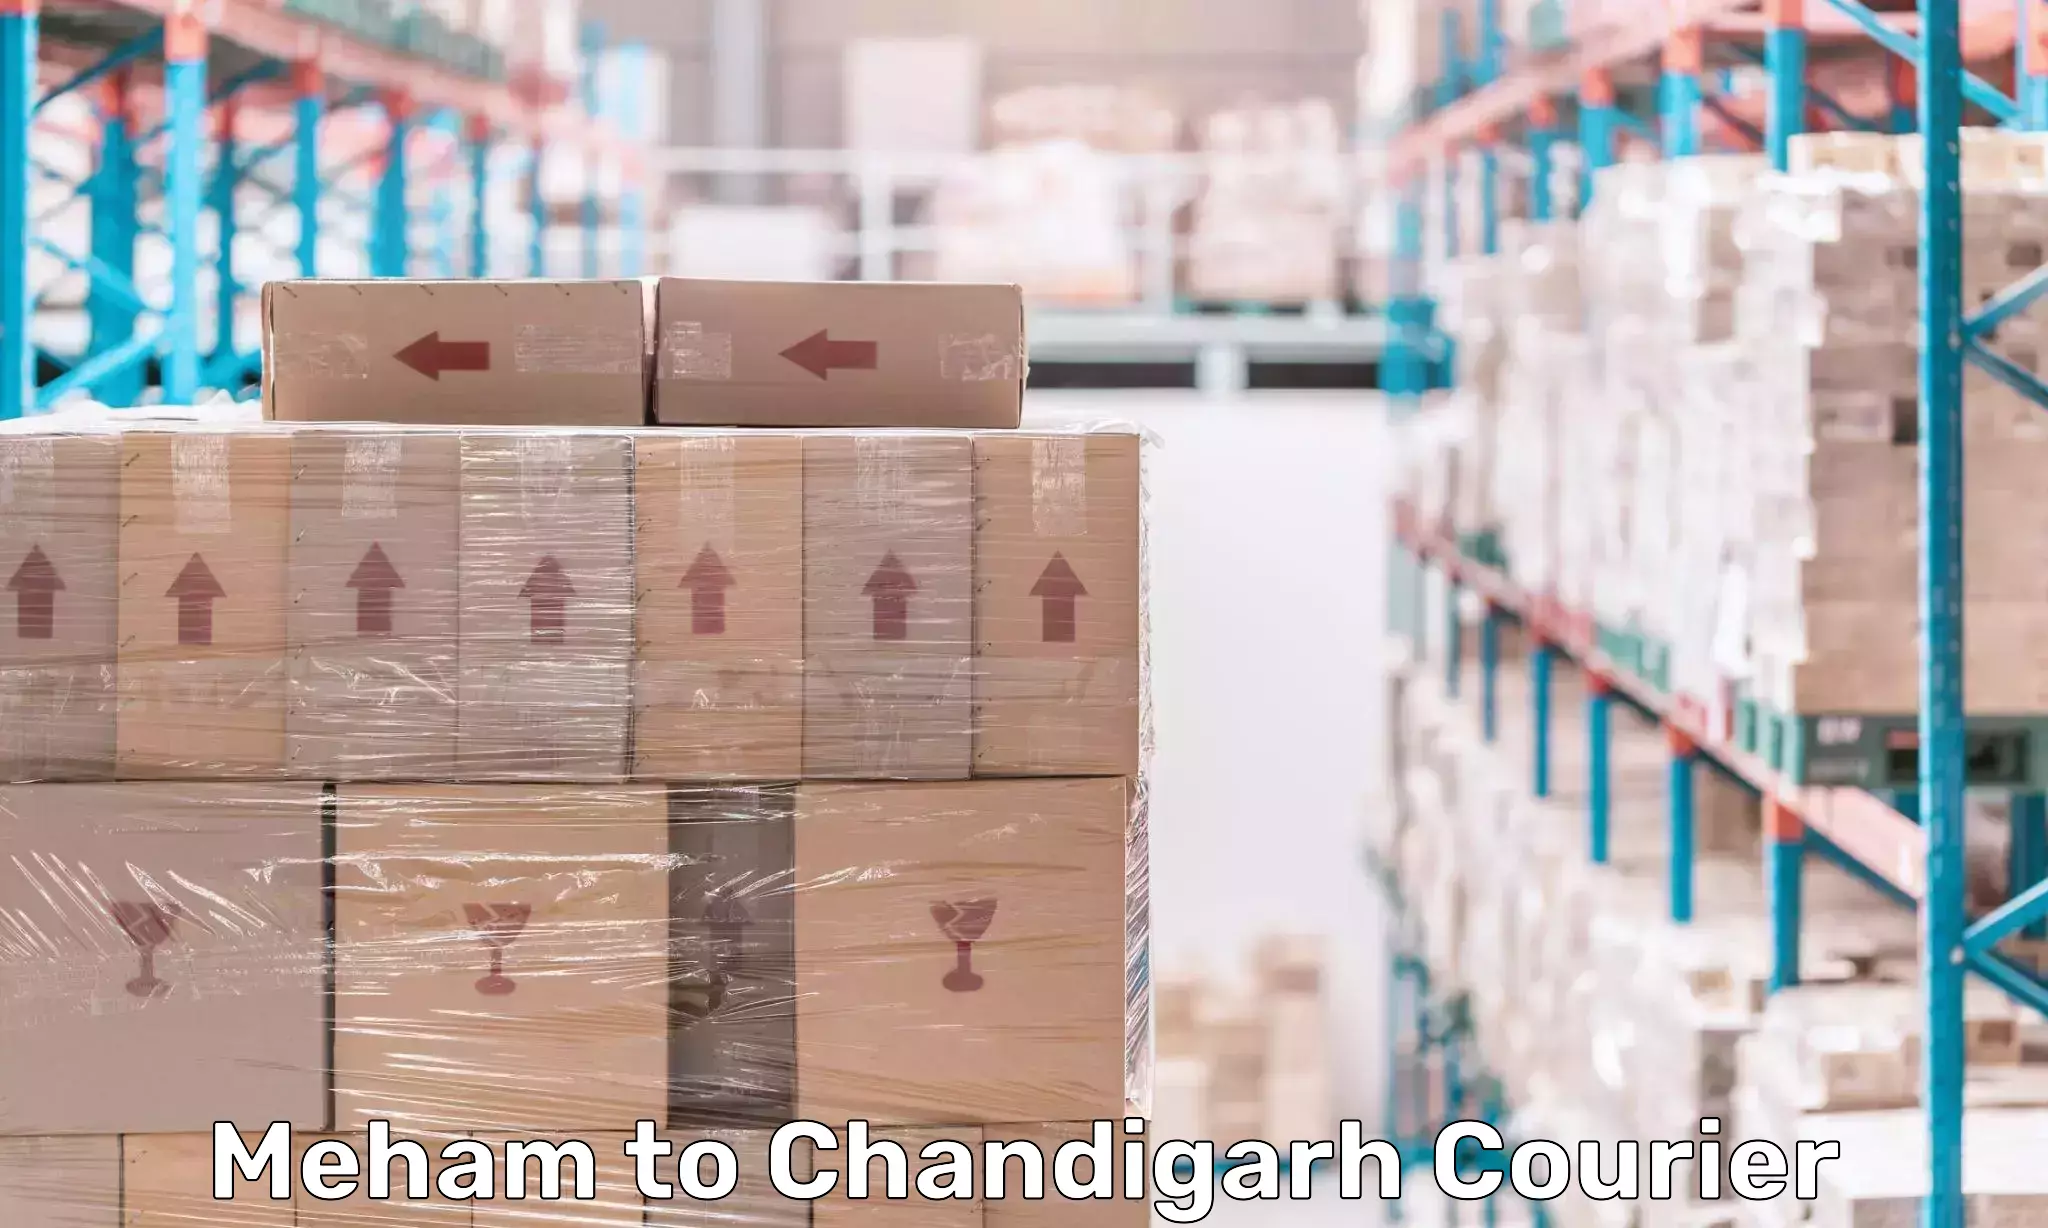 Global logistics network Meham to Chandigarh